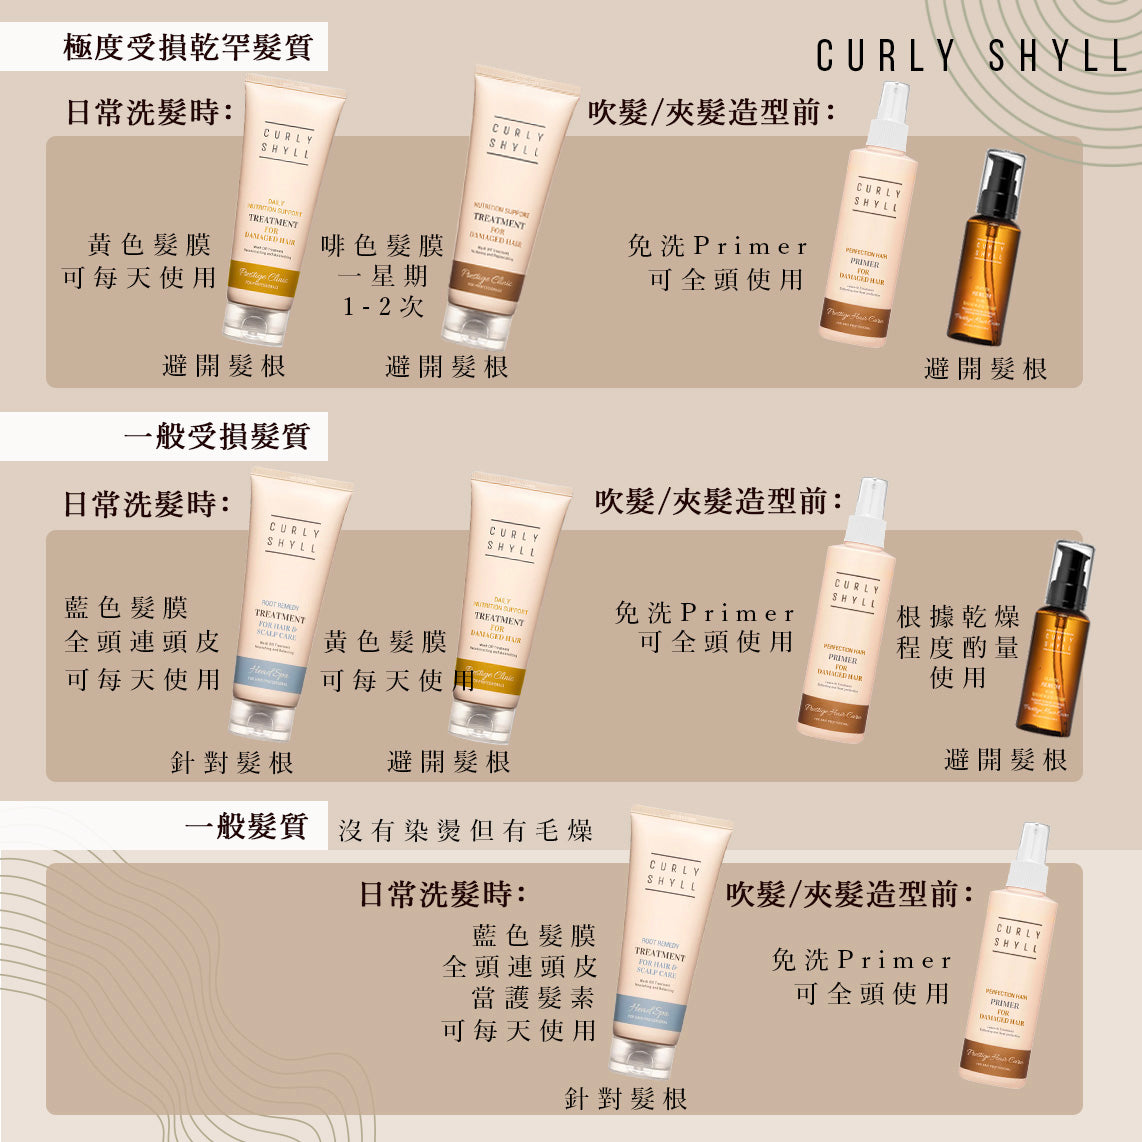 CURLY SHYLL Hair Primer 滋養免洗護髮乳 200ml【全網現貨】（官方指定價）